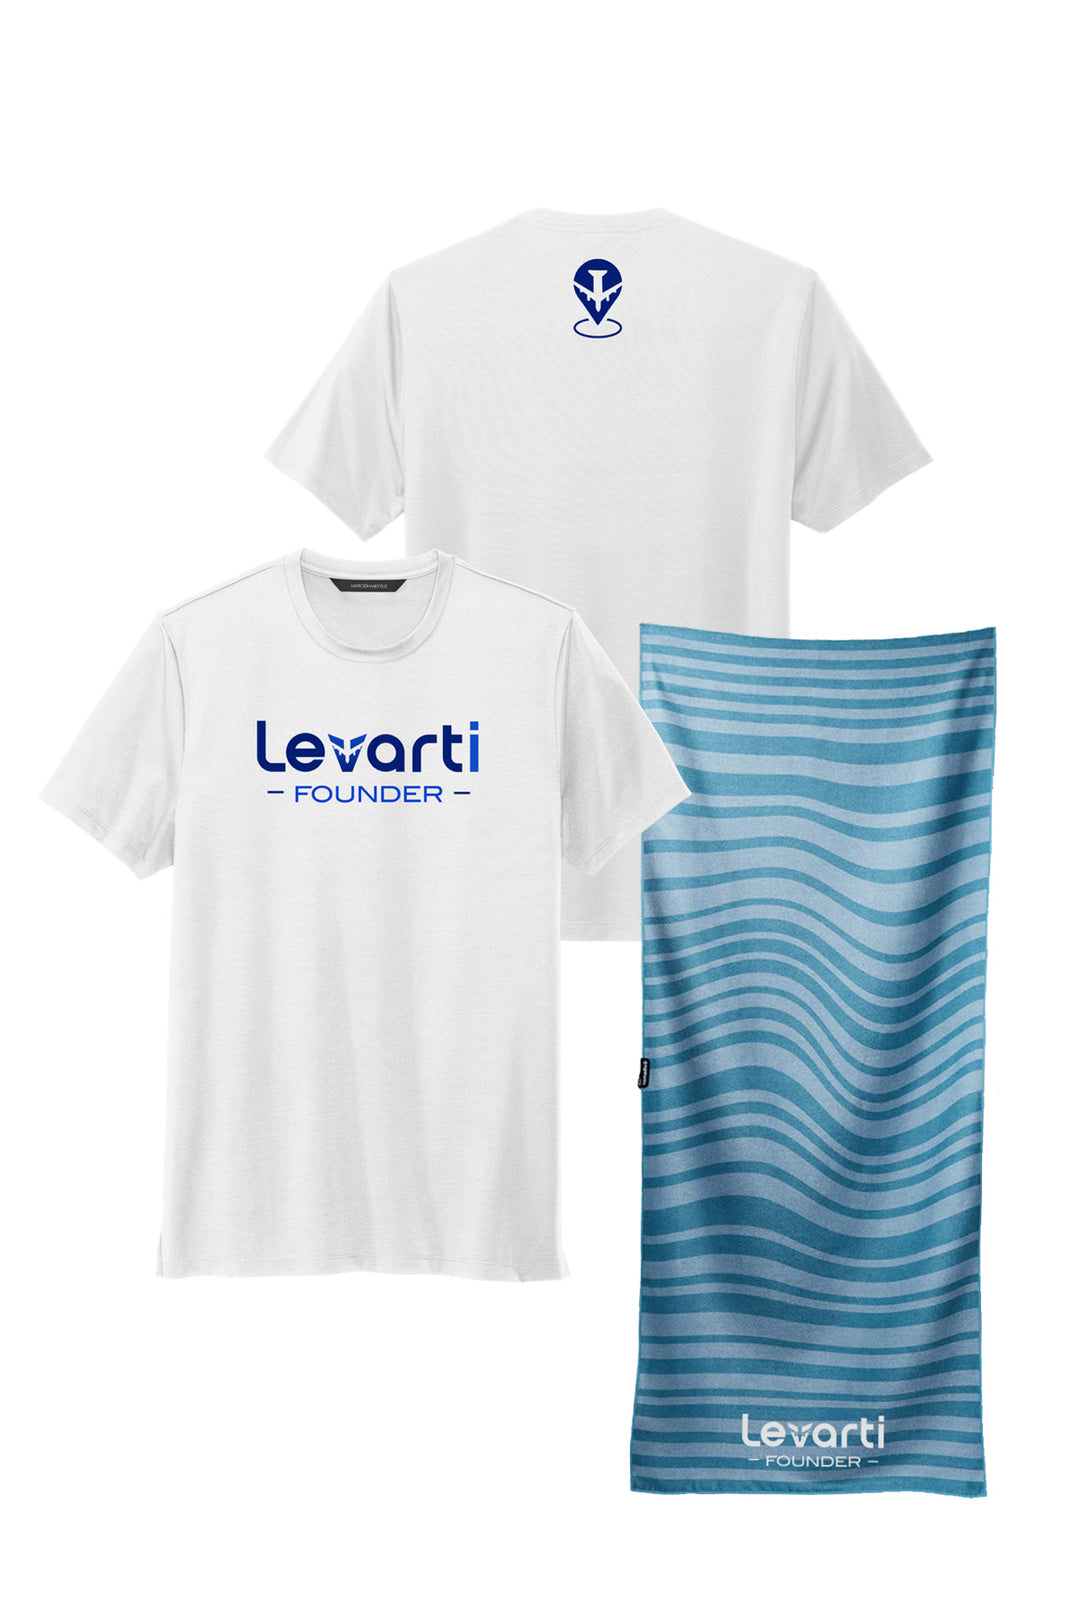 Levarti Limited Founder